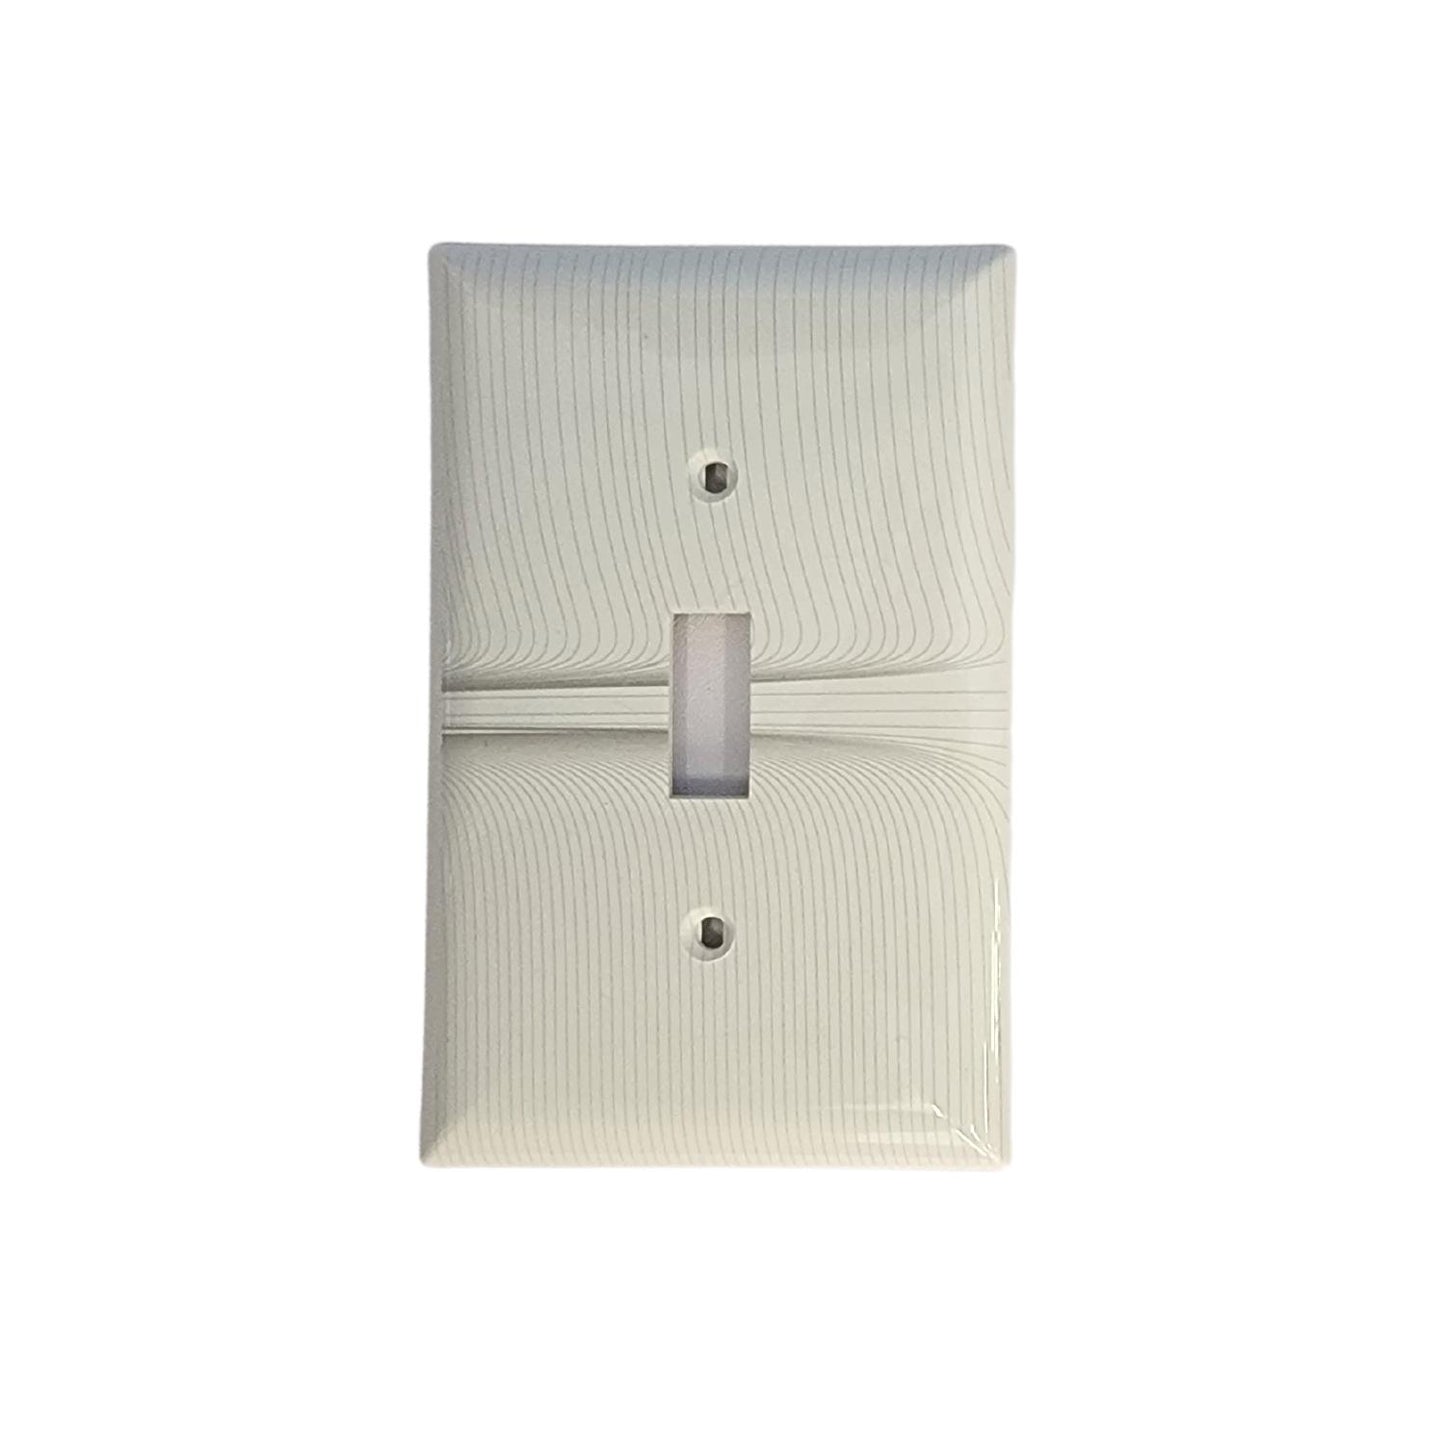 Geometric Design Single Toggle Light Switch Cover Wall Plate White LA143-PWP1